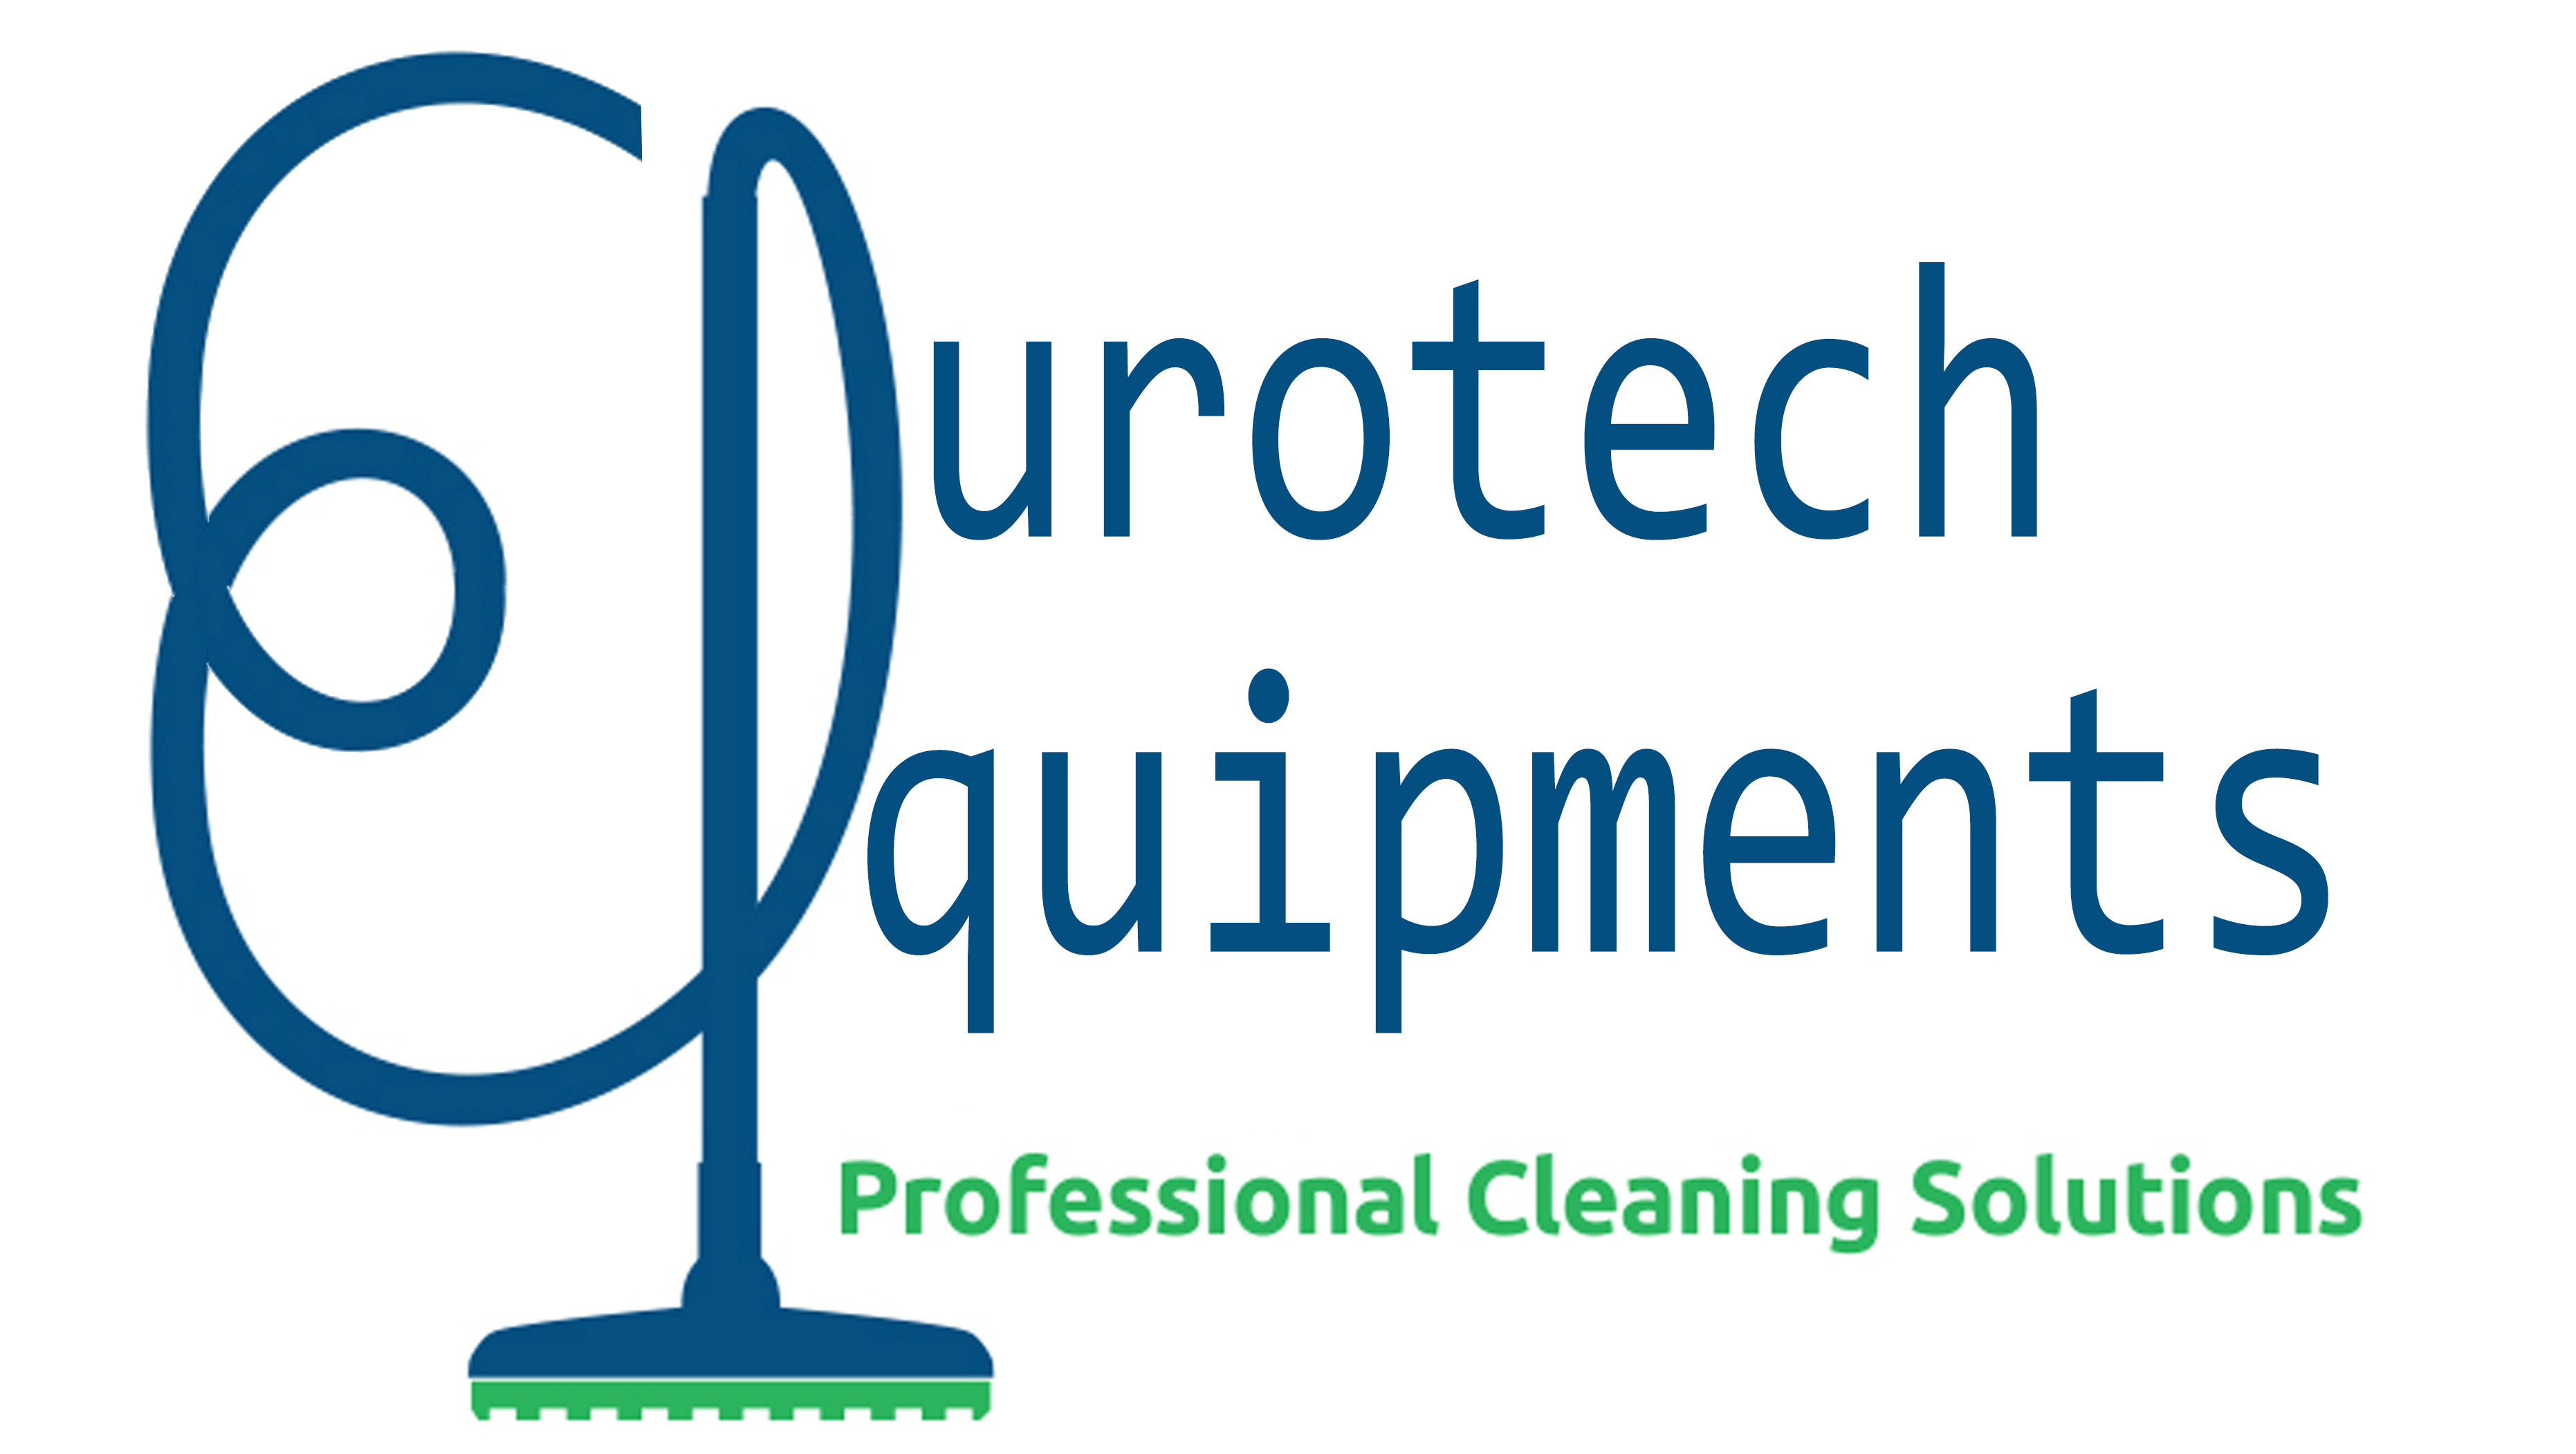 Eurotech Equipments